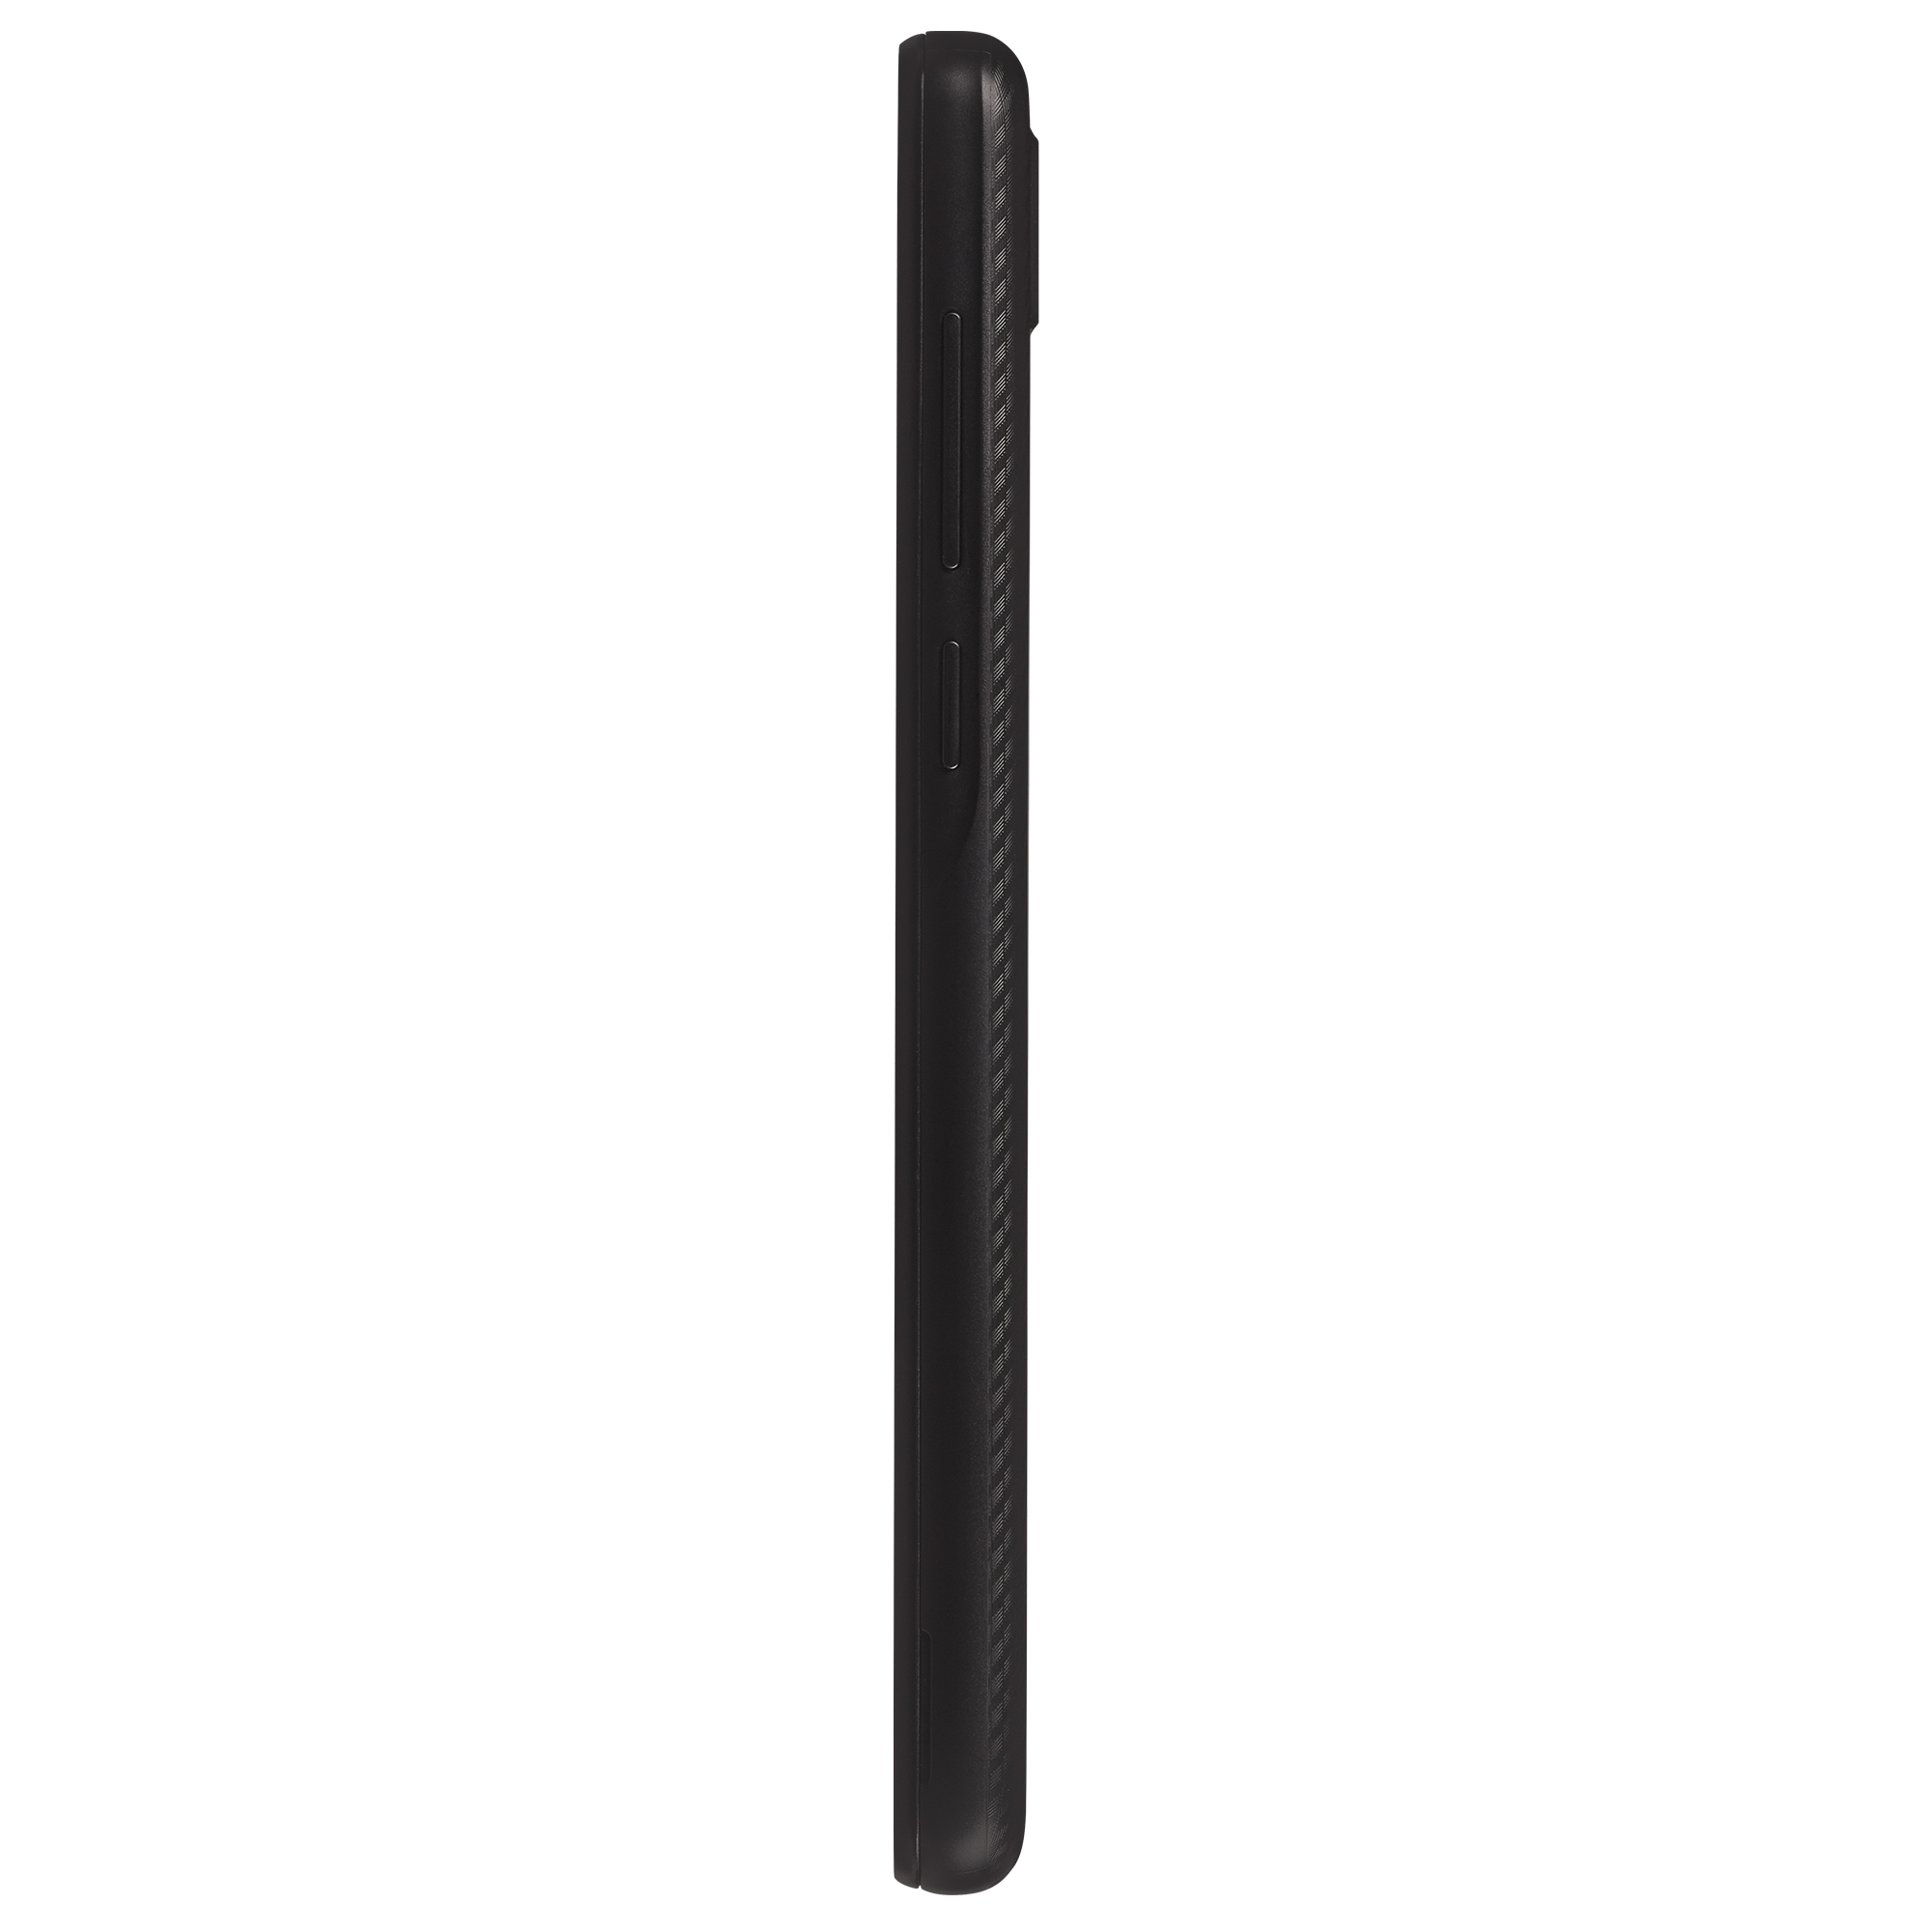 Straight Talk TCL A3, 32GB, Black- Prepaid Smartphone [Locked to Straight Talk] - image 10 of 12